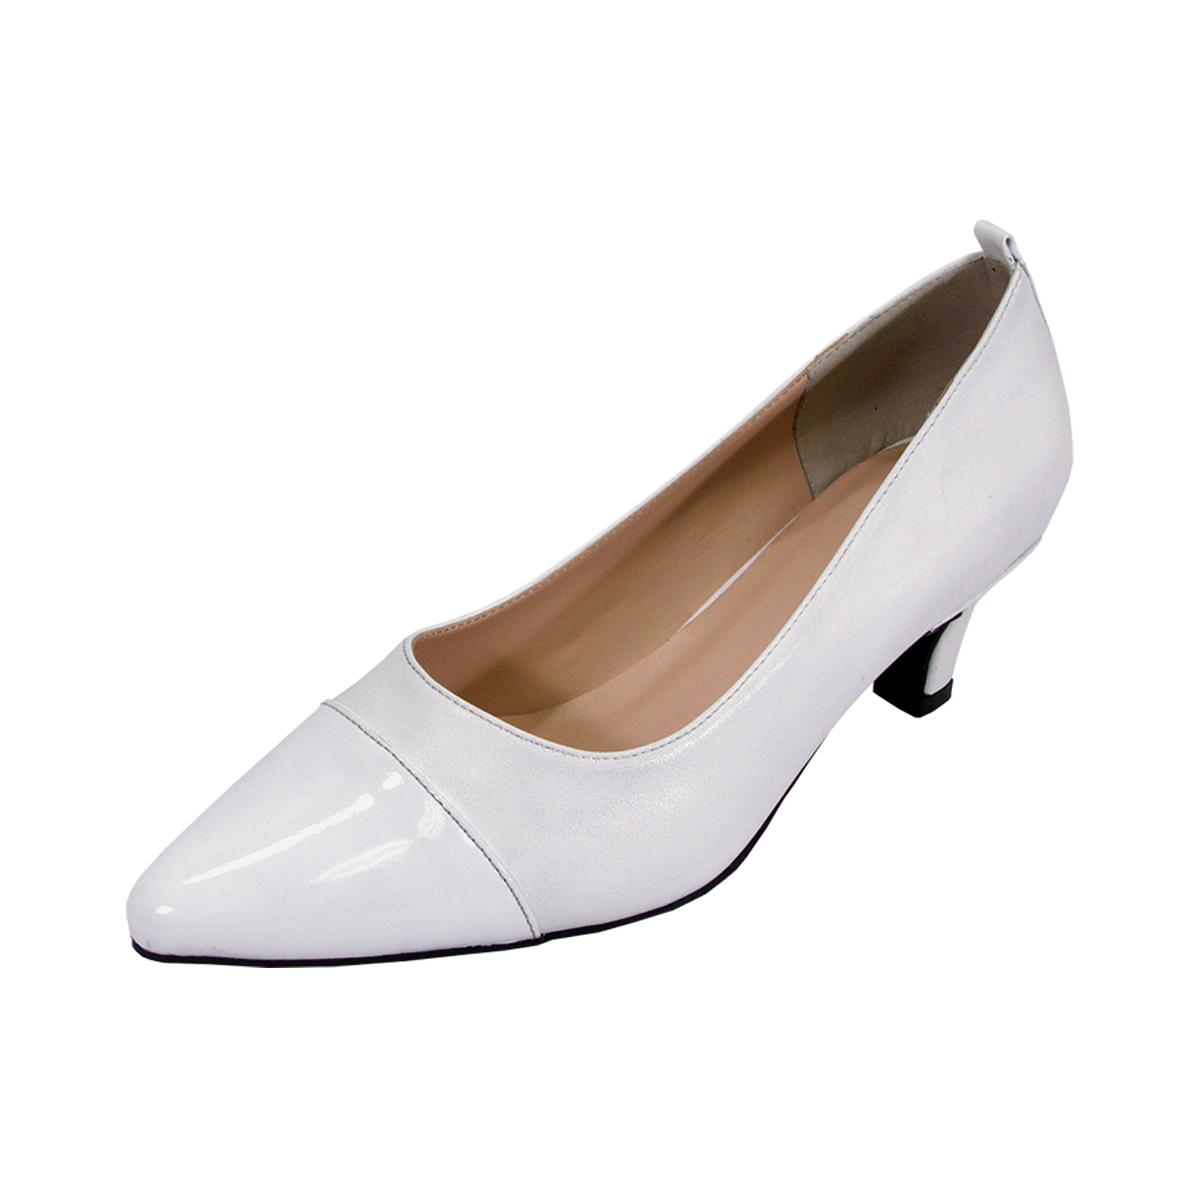 PEERAGE Arlene Women's Wide Width Casual Comfort Mid Heel Dress Shoes for Wedding, Prom, Evening, Work WHITE 7 - image 1 of 6